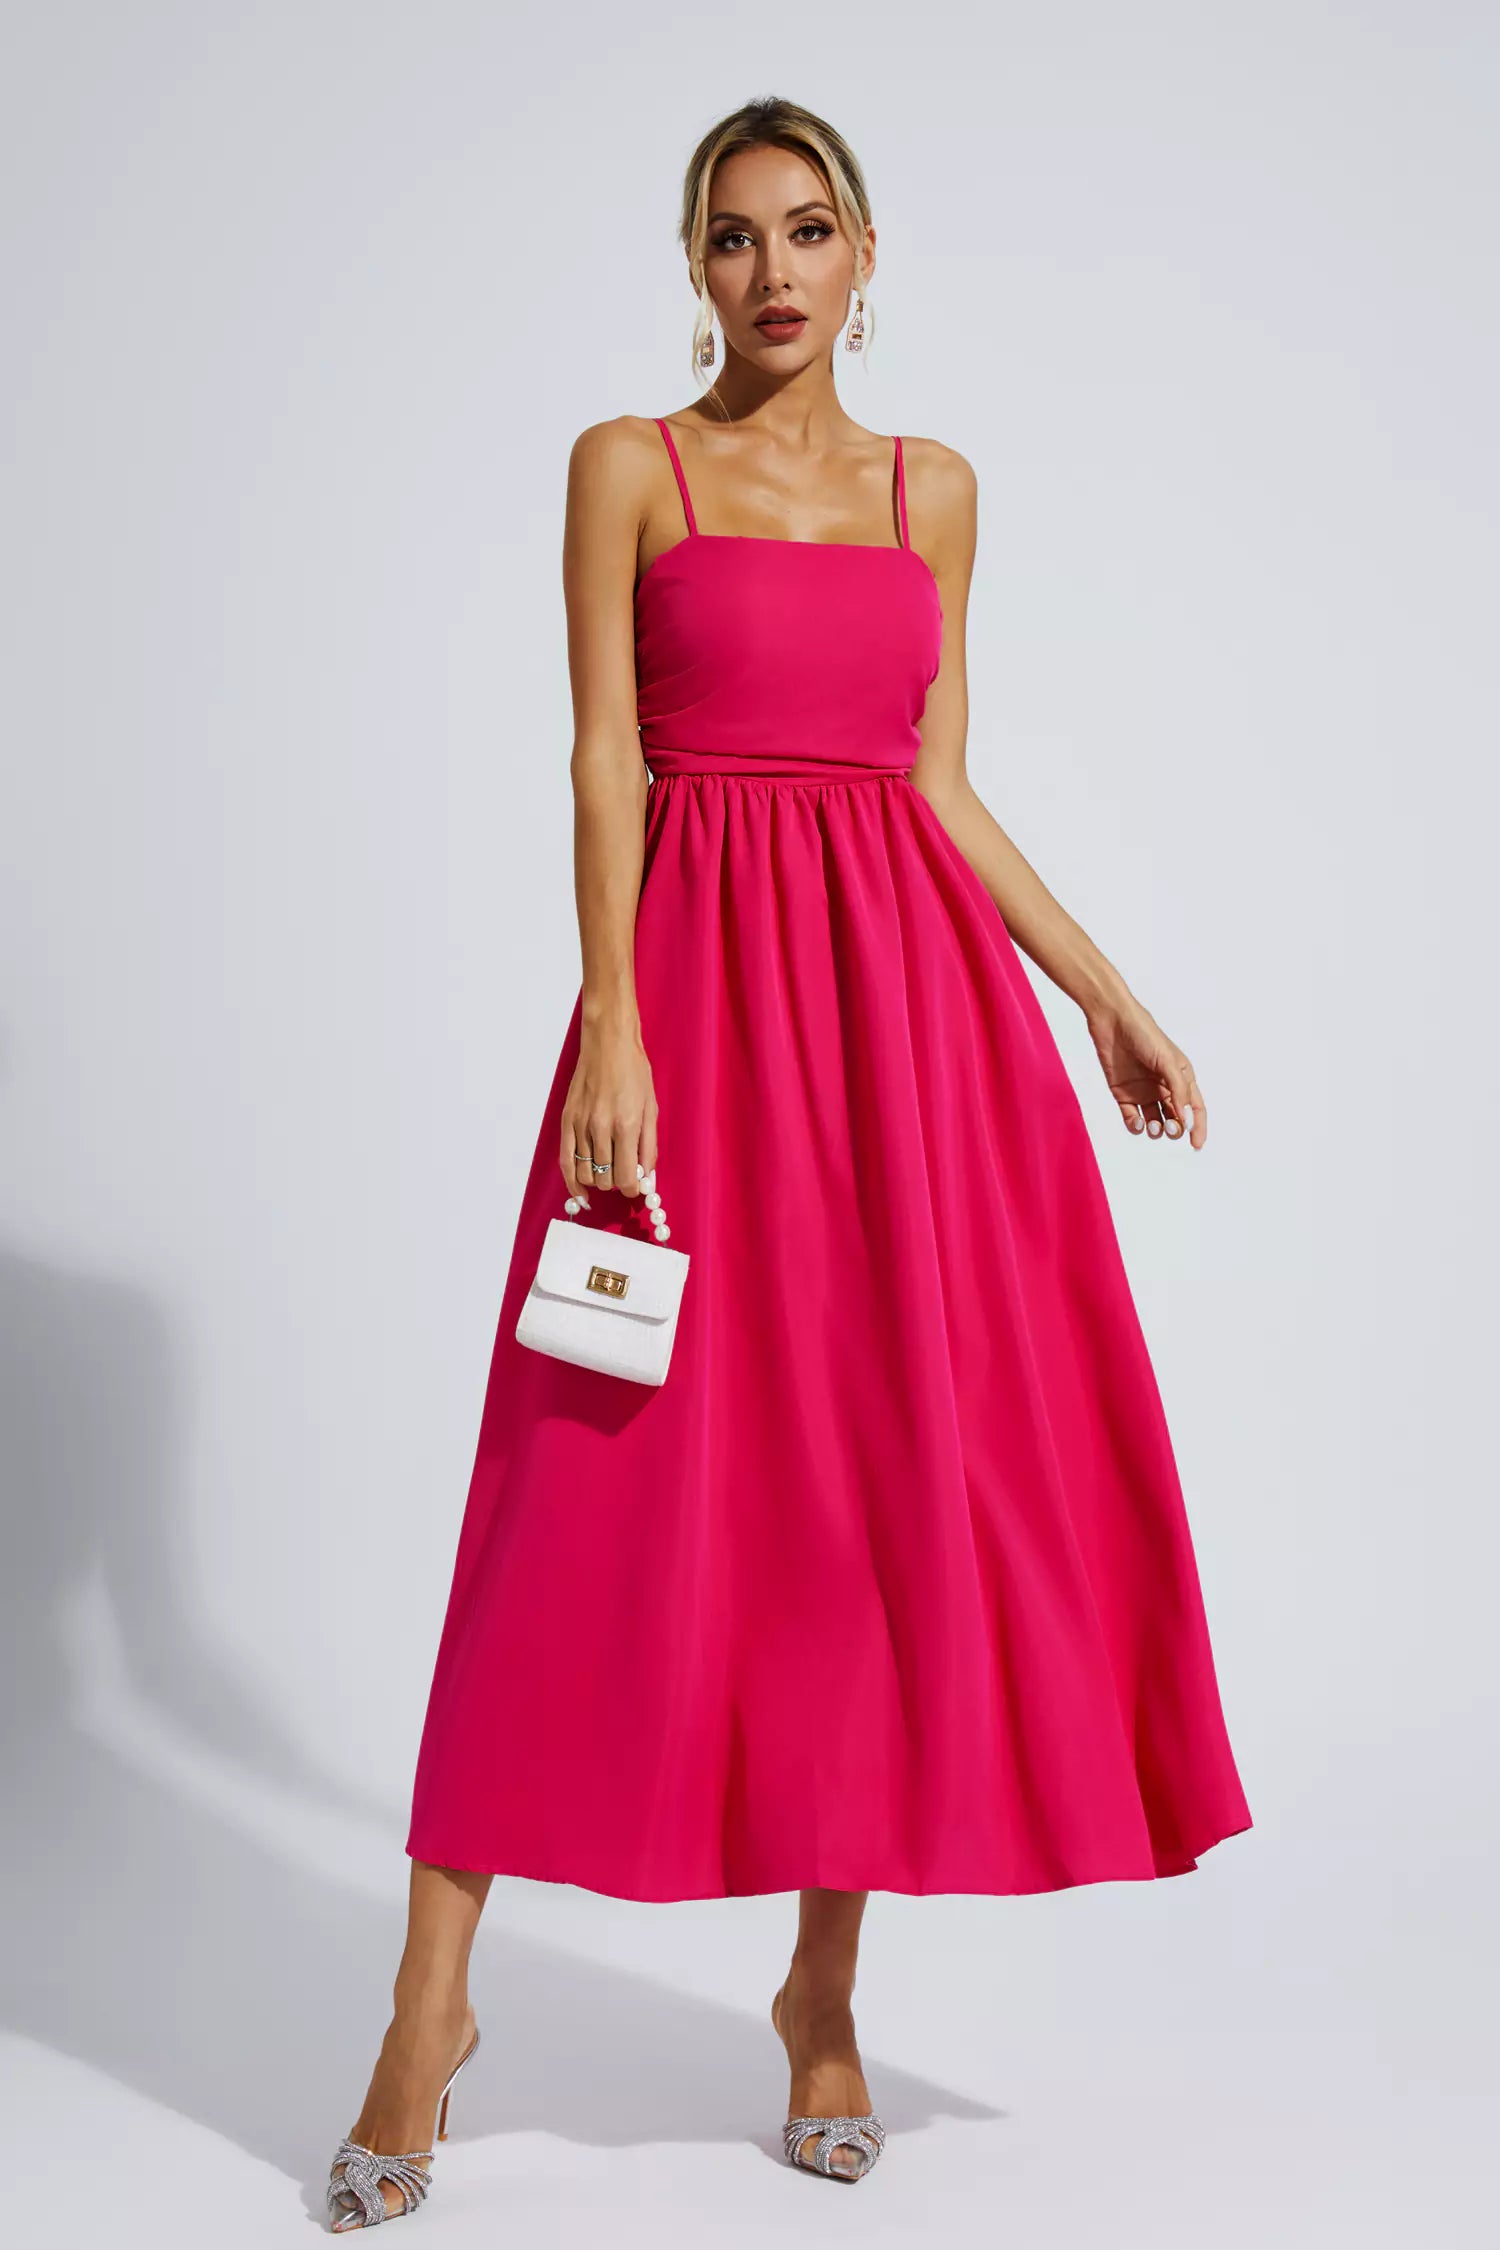 Kyla Rose Red Slip Vacation Maxi Dress - Catchall